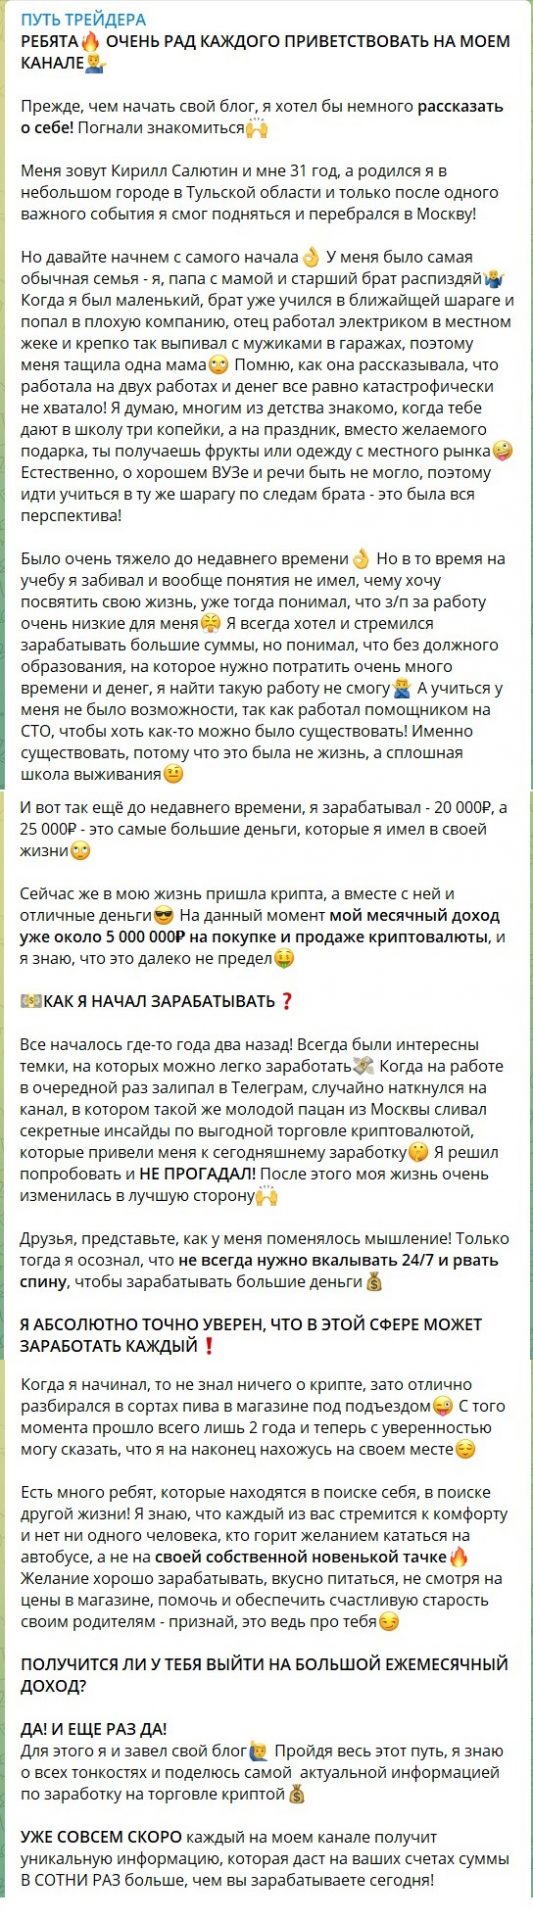 Информация о Кирилле Салютине с канала Телеграм